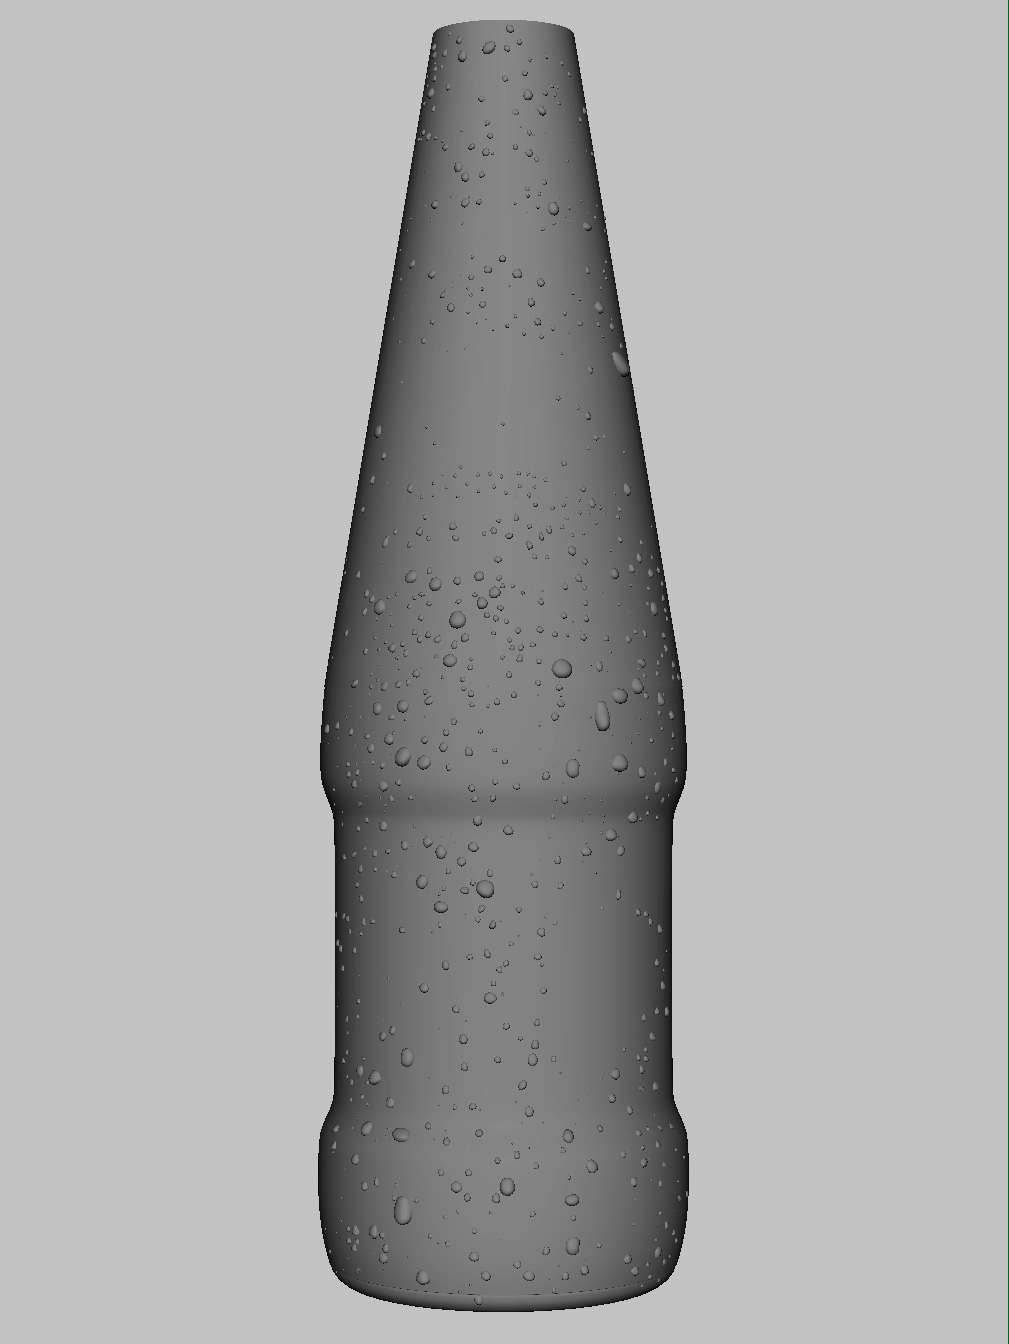 Souverein CGI 3D postproduction Carlsberg bottle beer Packshot luminous creative imaging fedde souverein